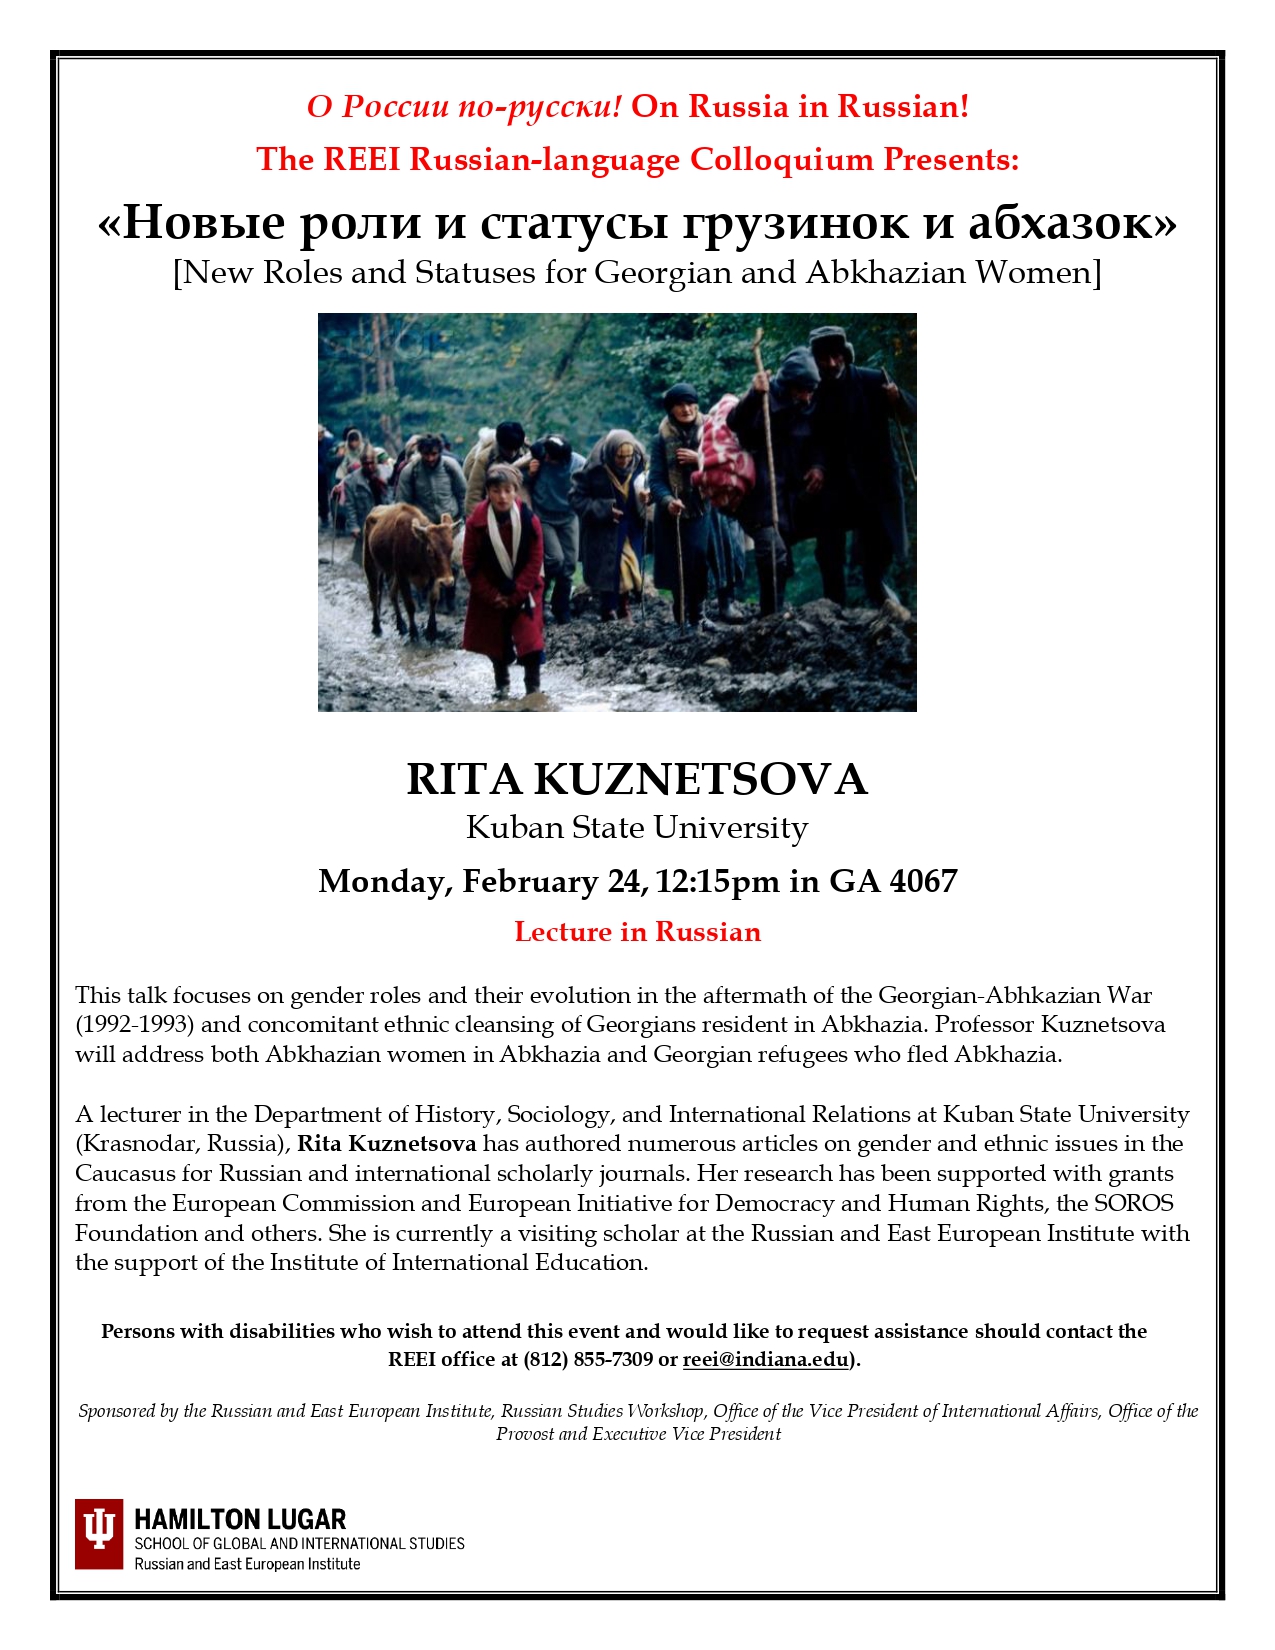 R.-Kuznetsova-Flyer-FINAL_page-0001.jpg